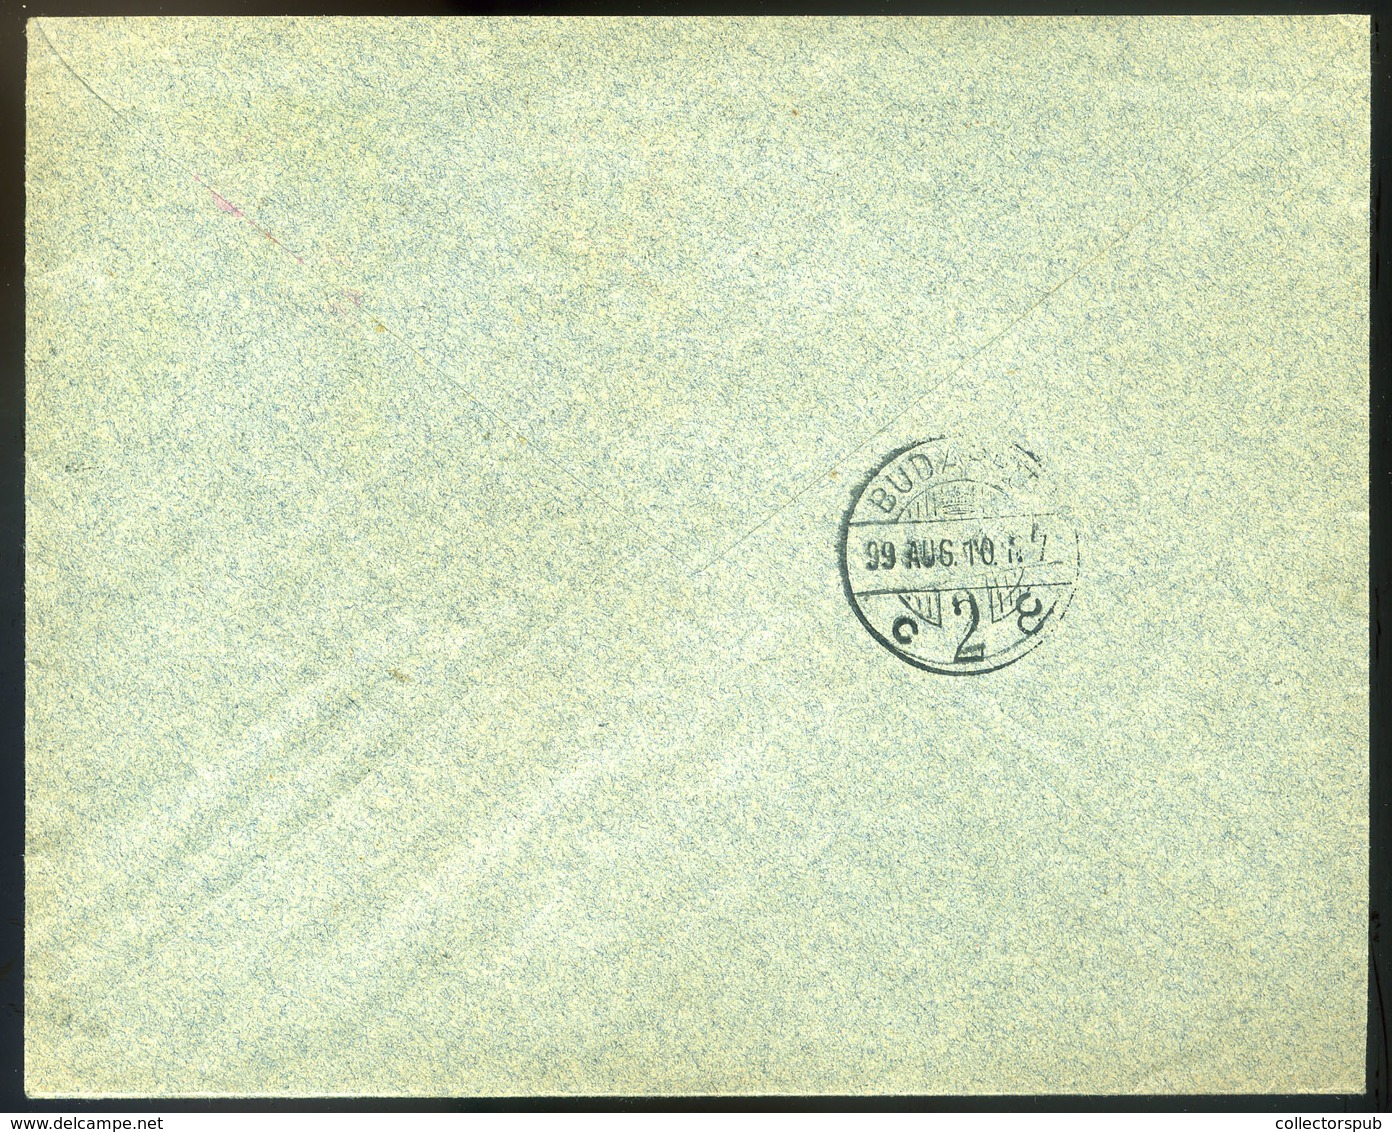 97185 HERMÁND 1899. Ajánlott Levél , Hermaneczi Papírgyár Budapestre Küldve  /  HERMÁND 1899 Reg. Letter, Hermaneczi Pap - Used Stamps